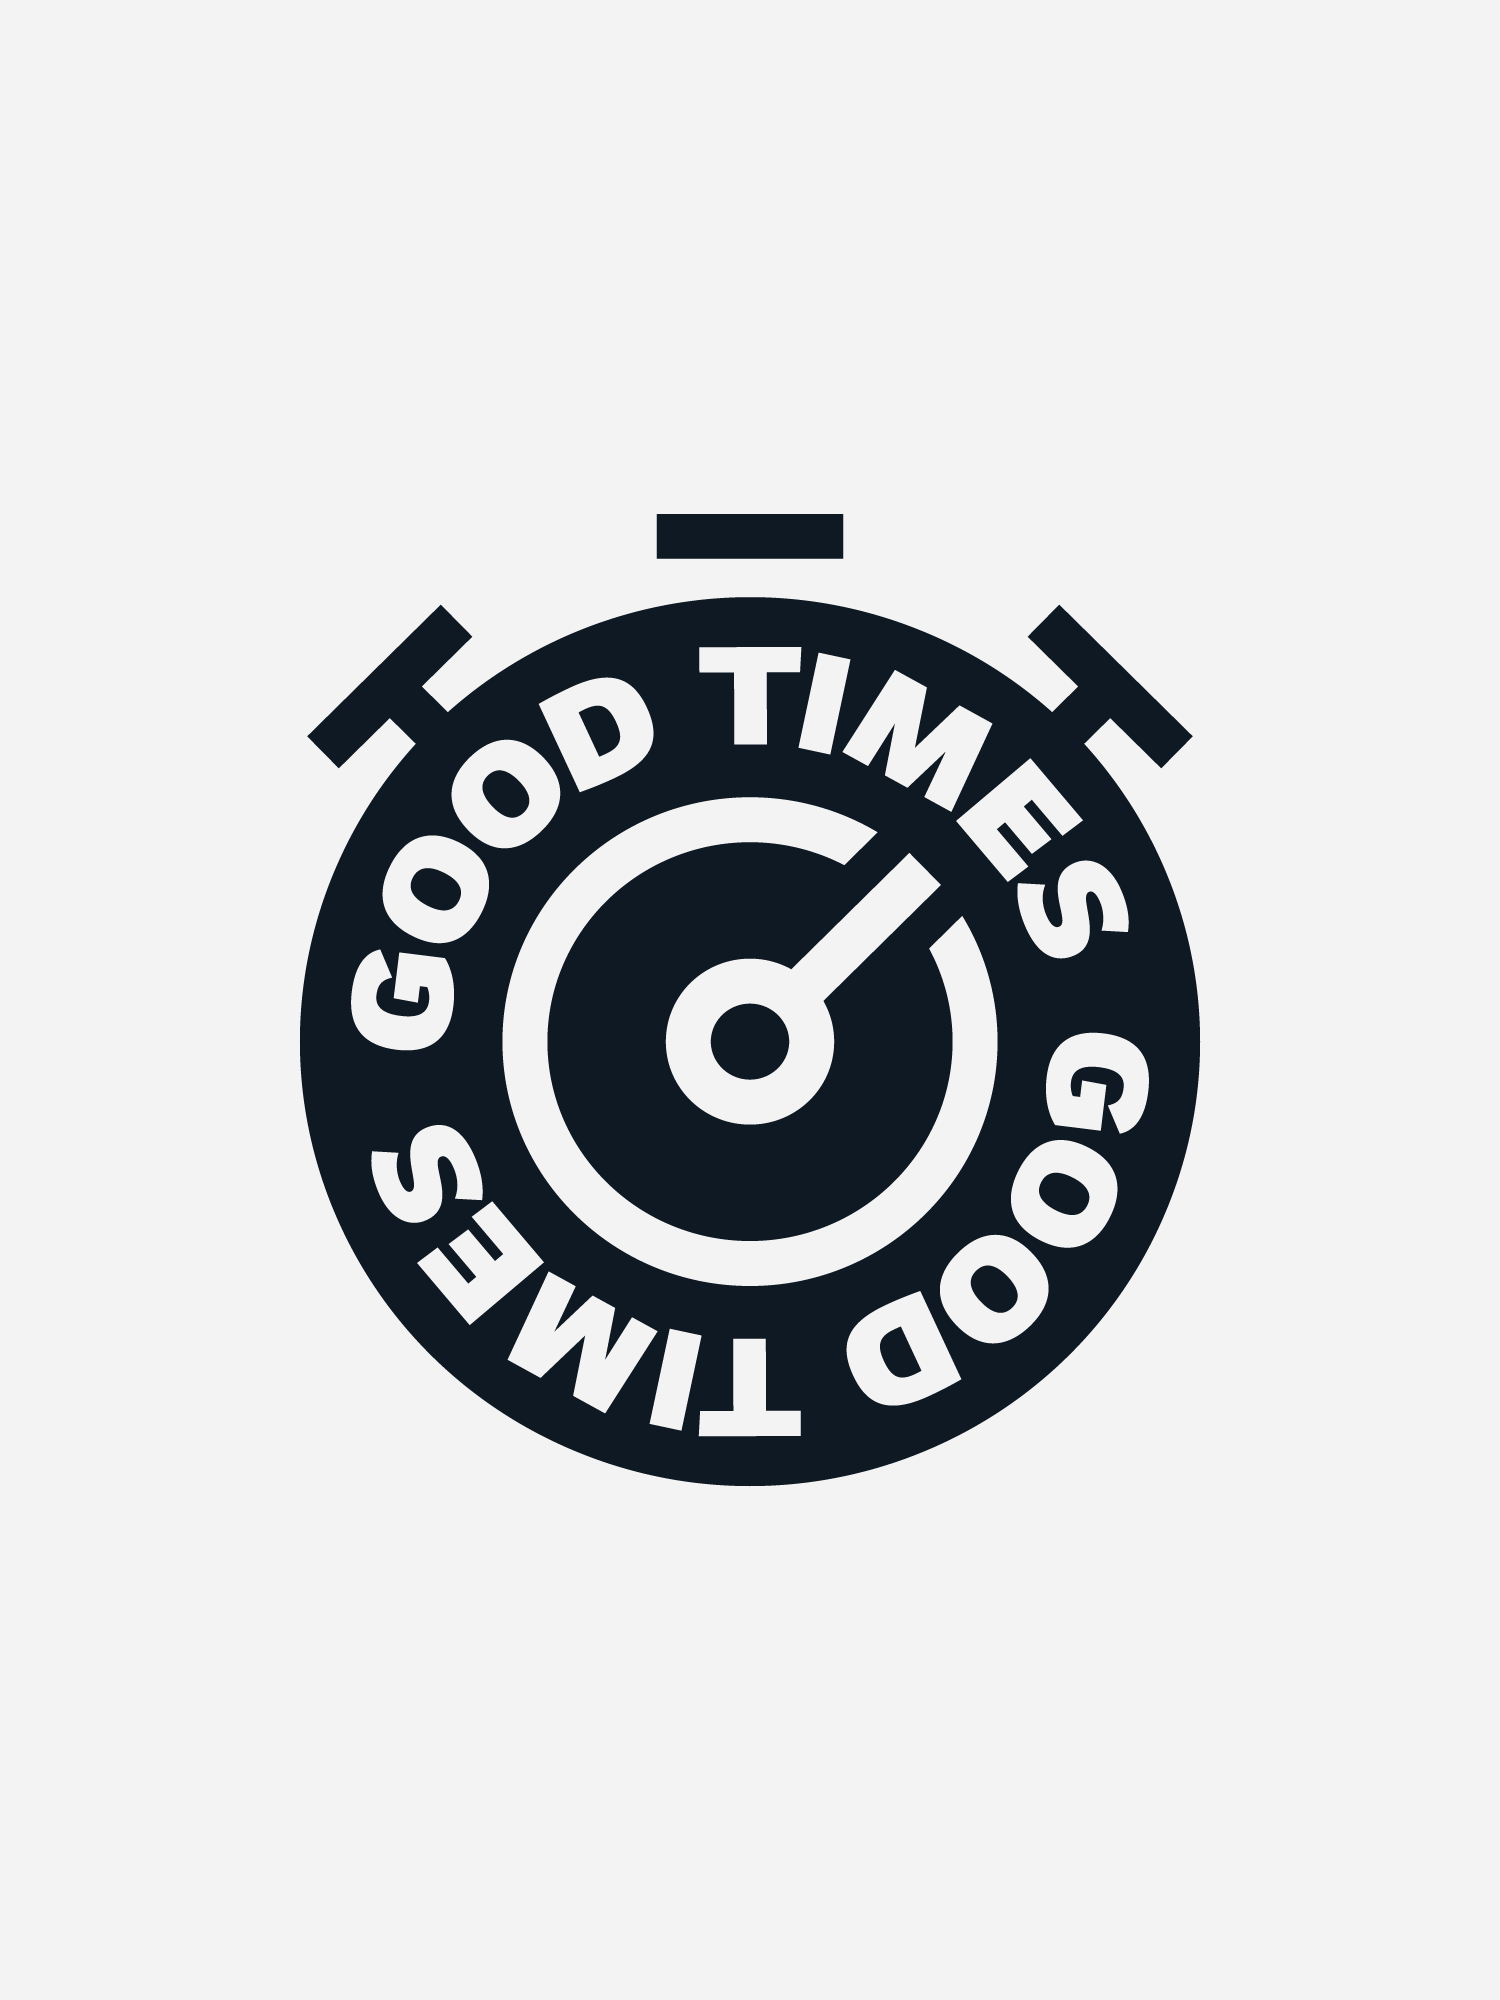 Black Back Bay Run Club 'Good Times' stopwatch on a light grey background